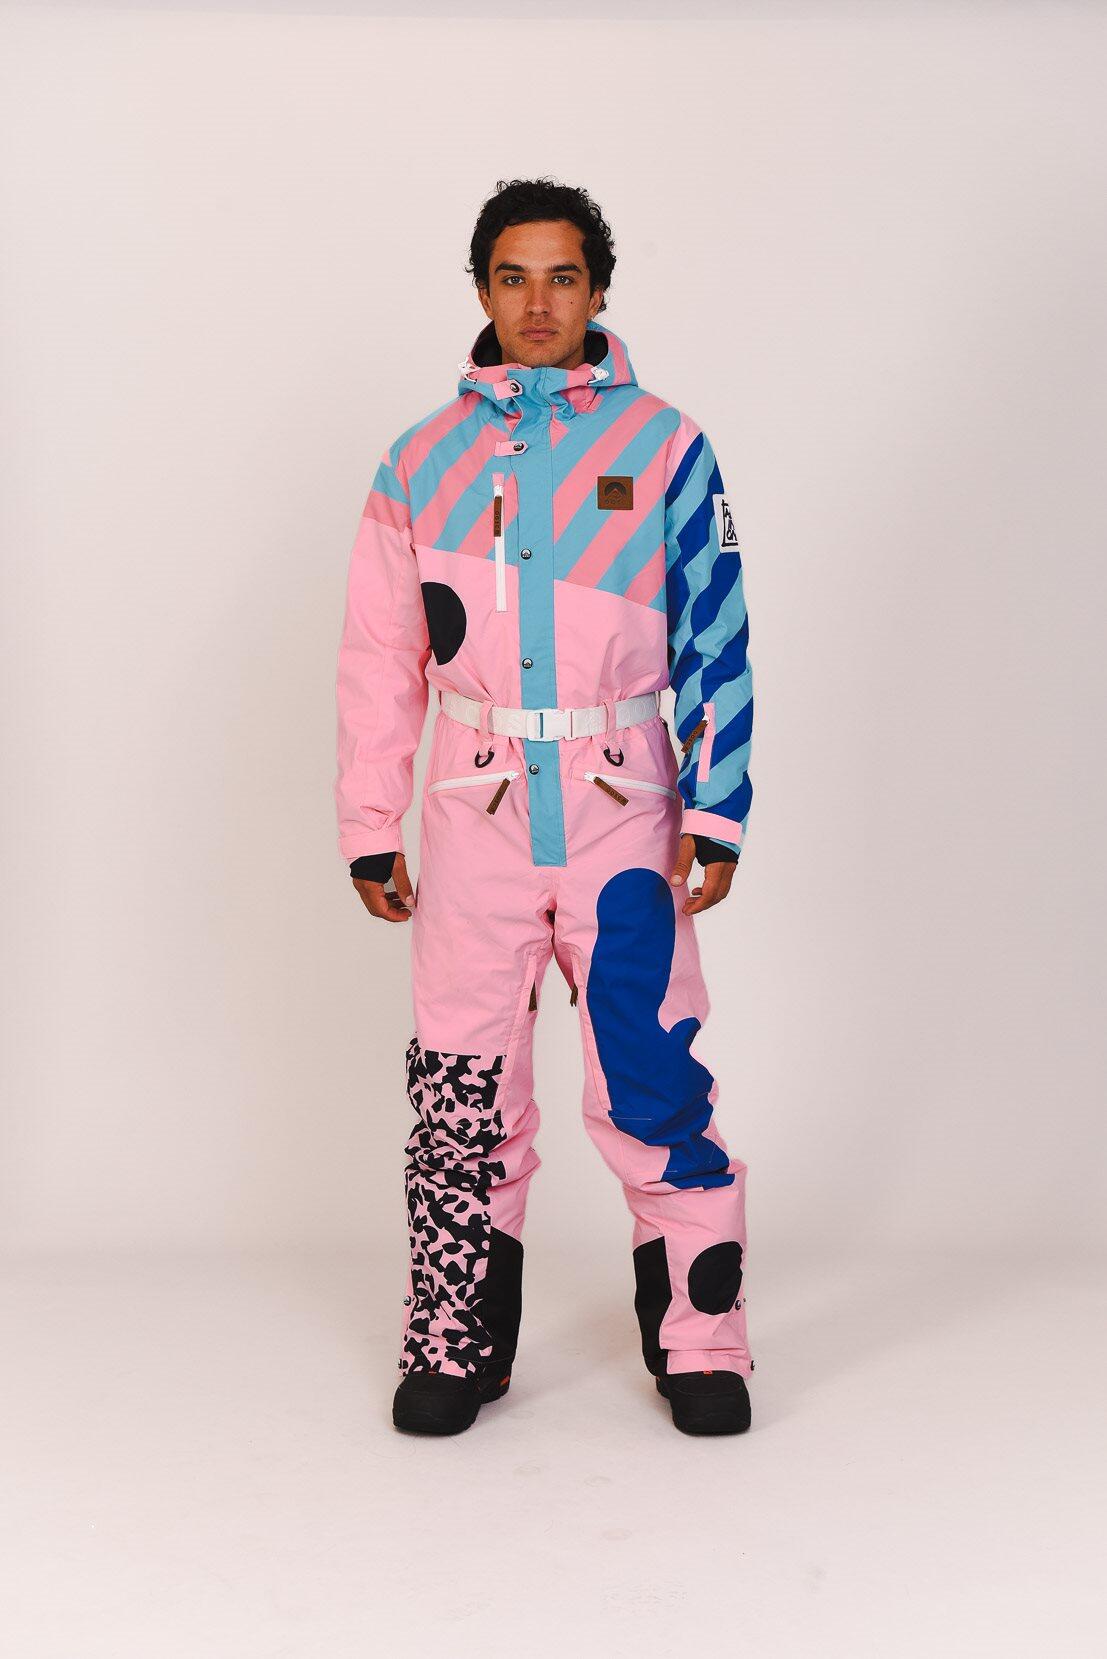 OOSC Penfold In Pink Ski Suit - Men's / Unisex